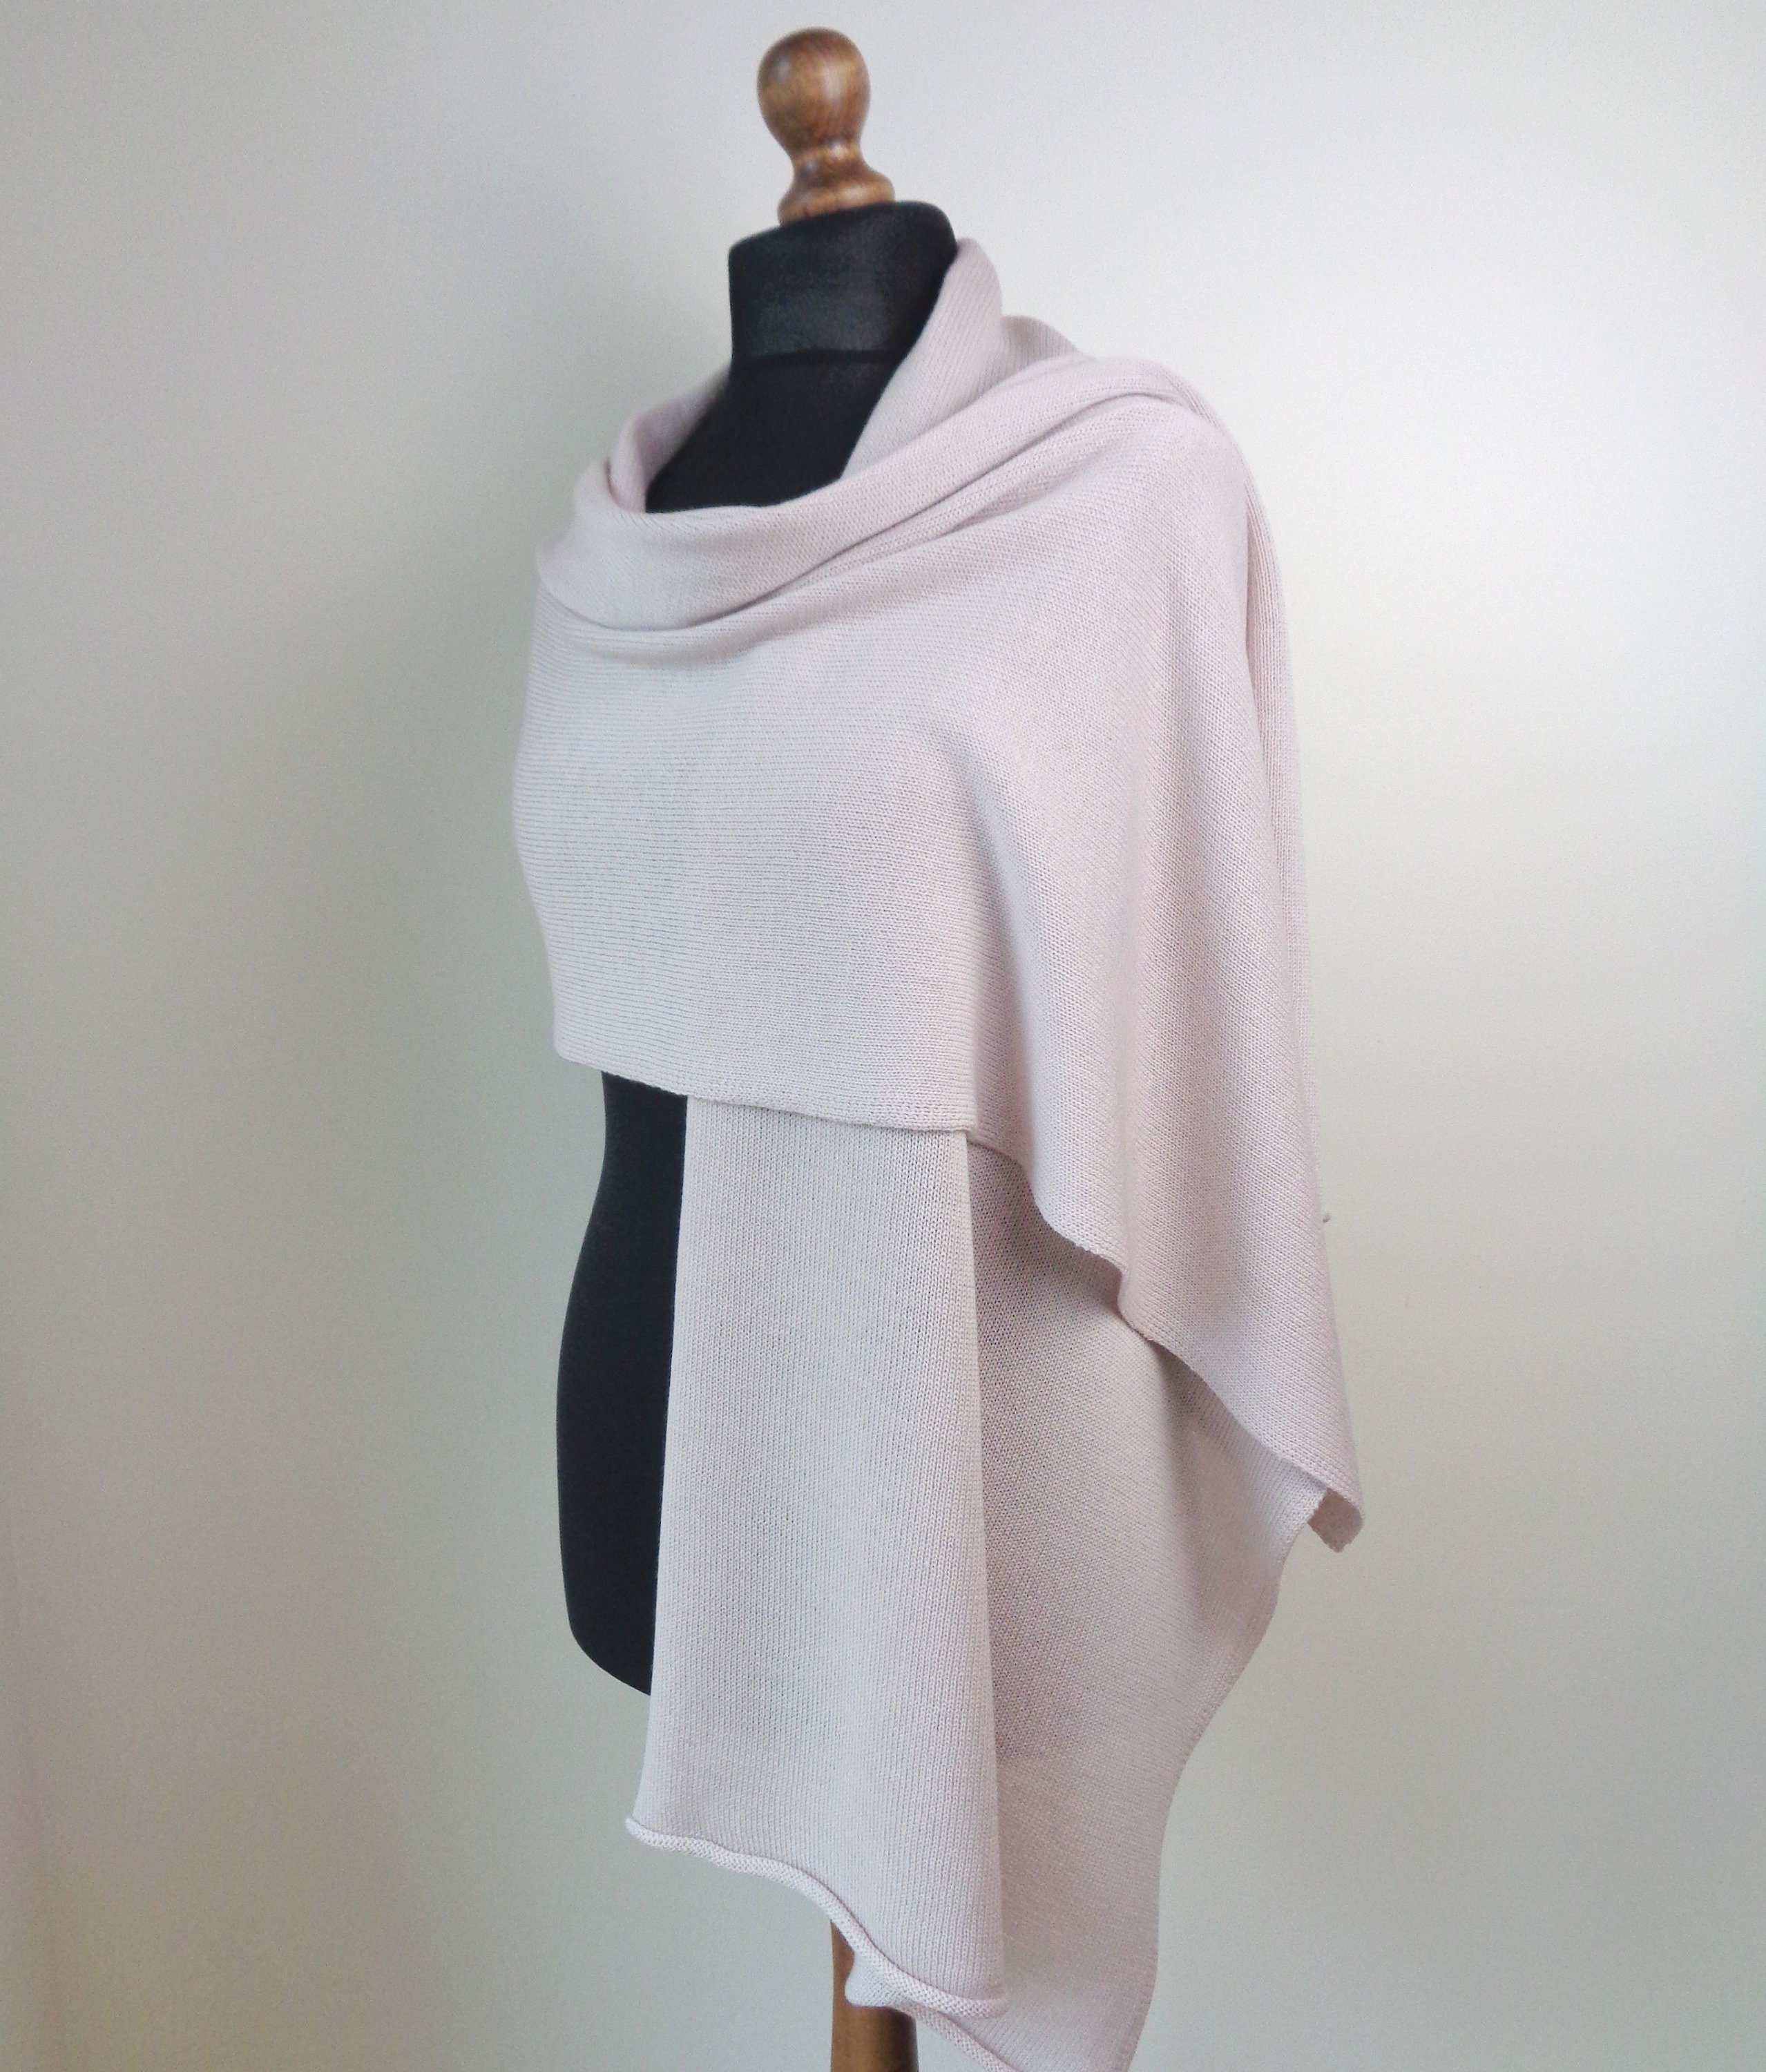 Cashmere scarf Pale blush pink merino cashmere knit wrap | Etsy